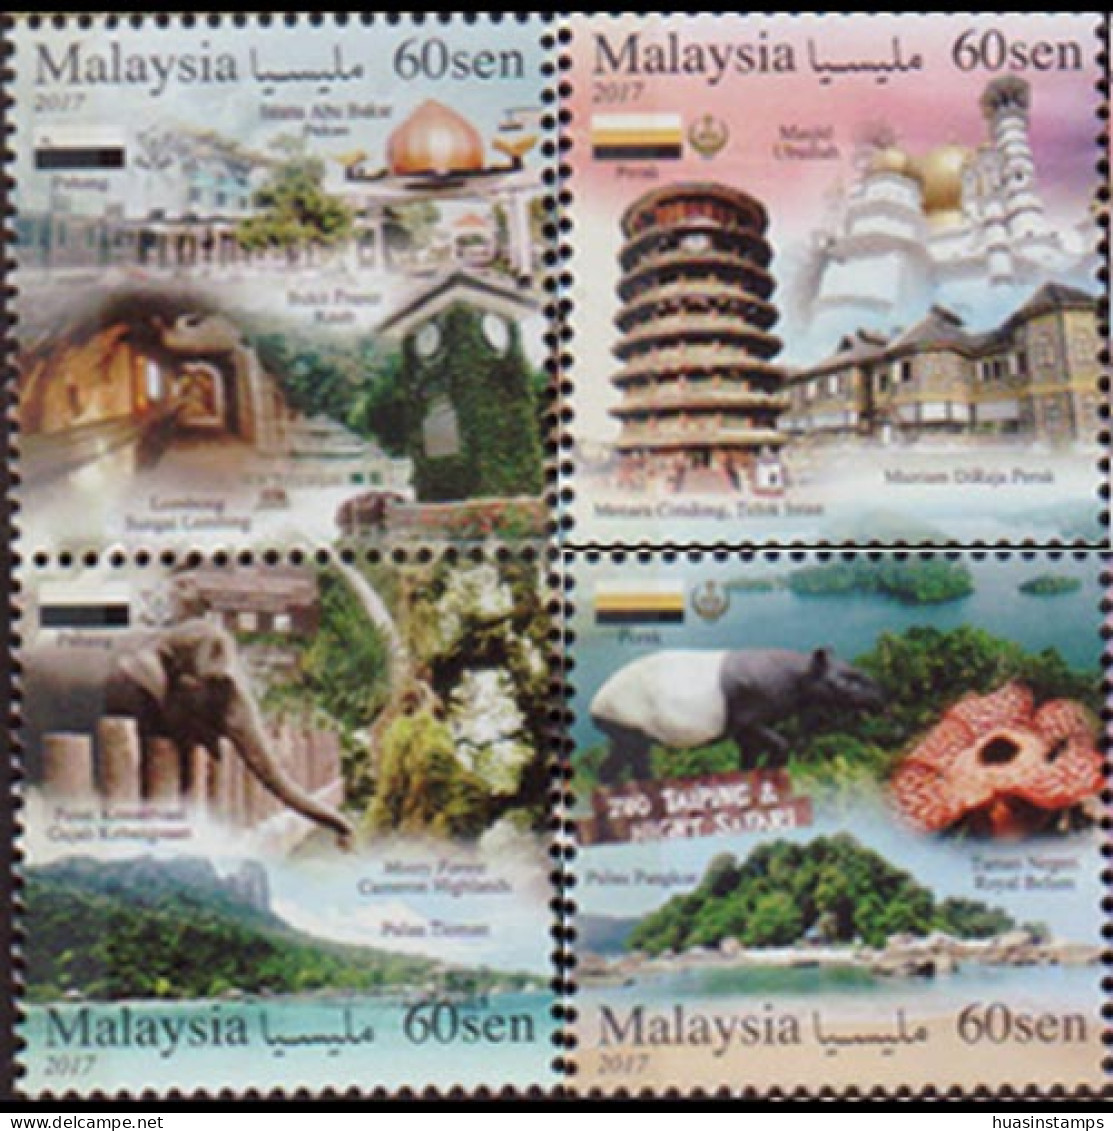 MALAYSIA 2017 - Scott# 1720a-d Tourism 60c MNH - Malaysia (1964-...)